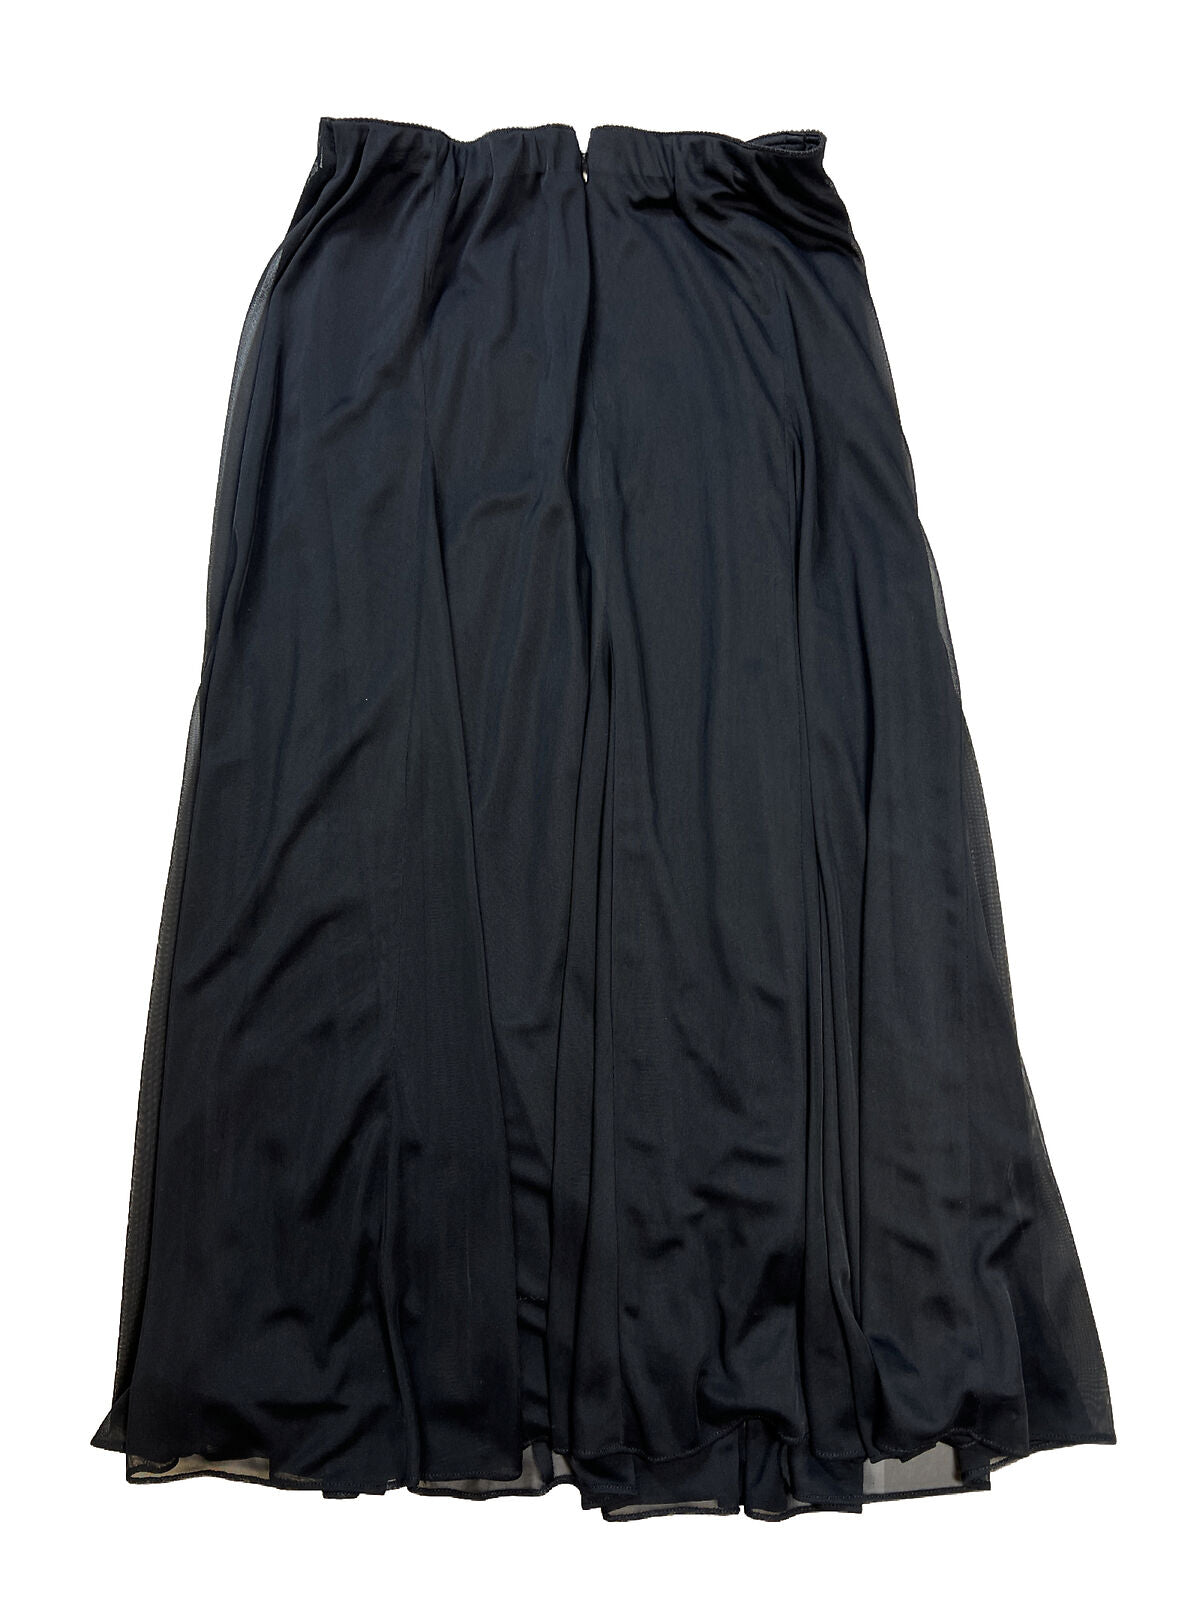 NUEVO Alex Evenings Falda midi con forro de malla plisada negra para mujer - S